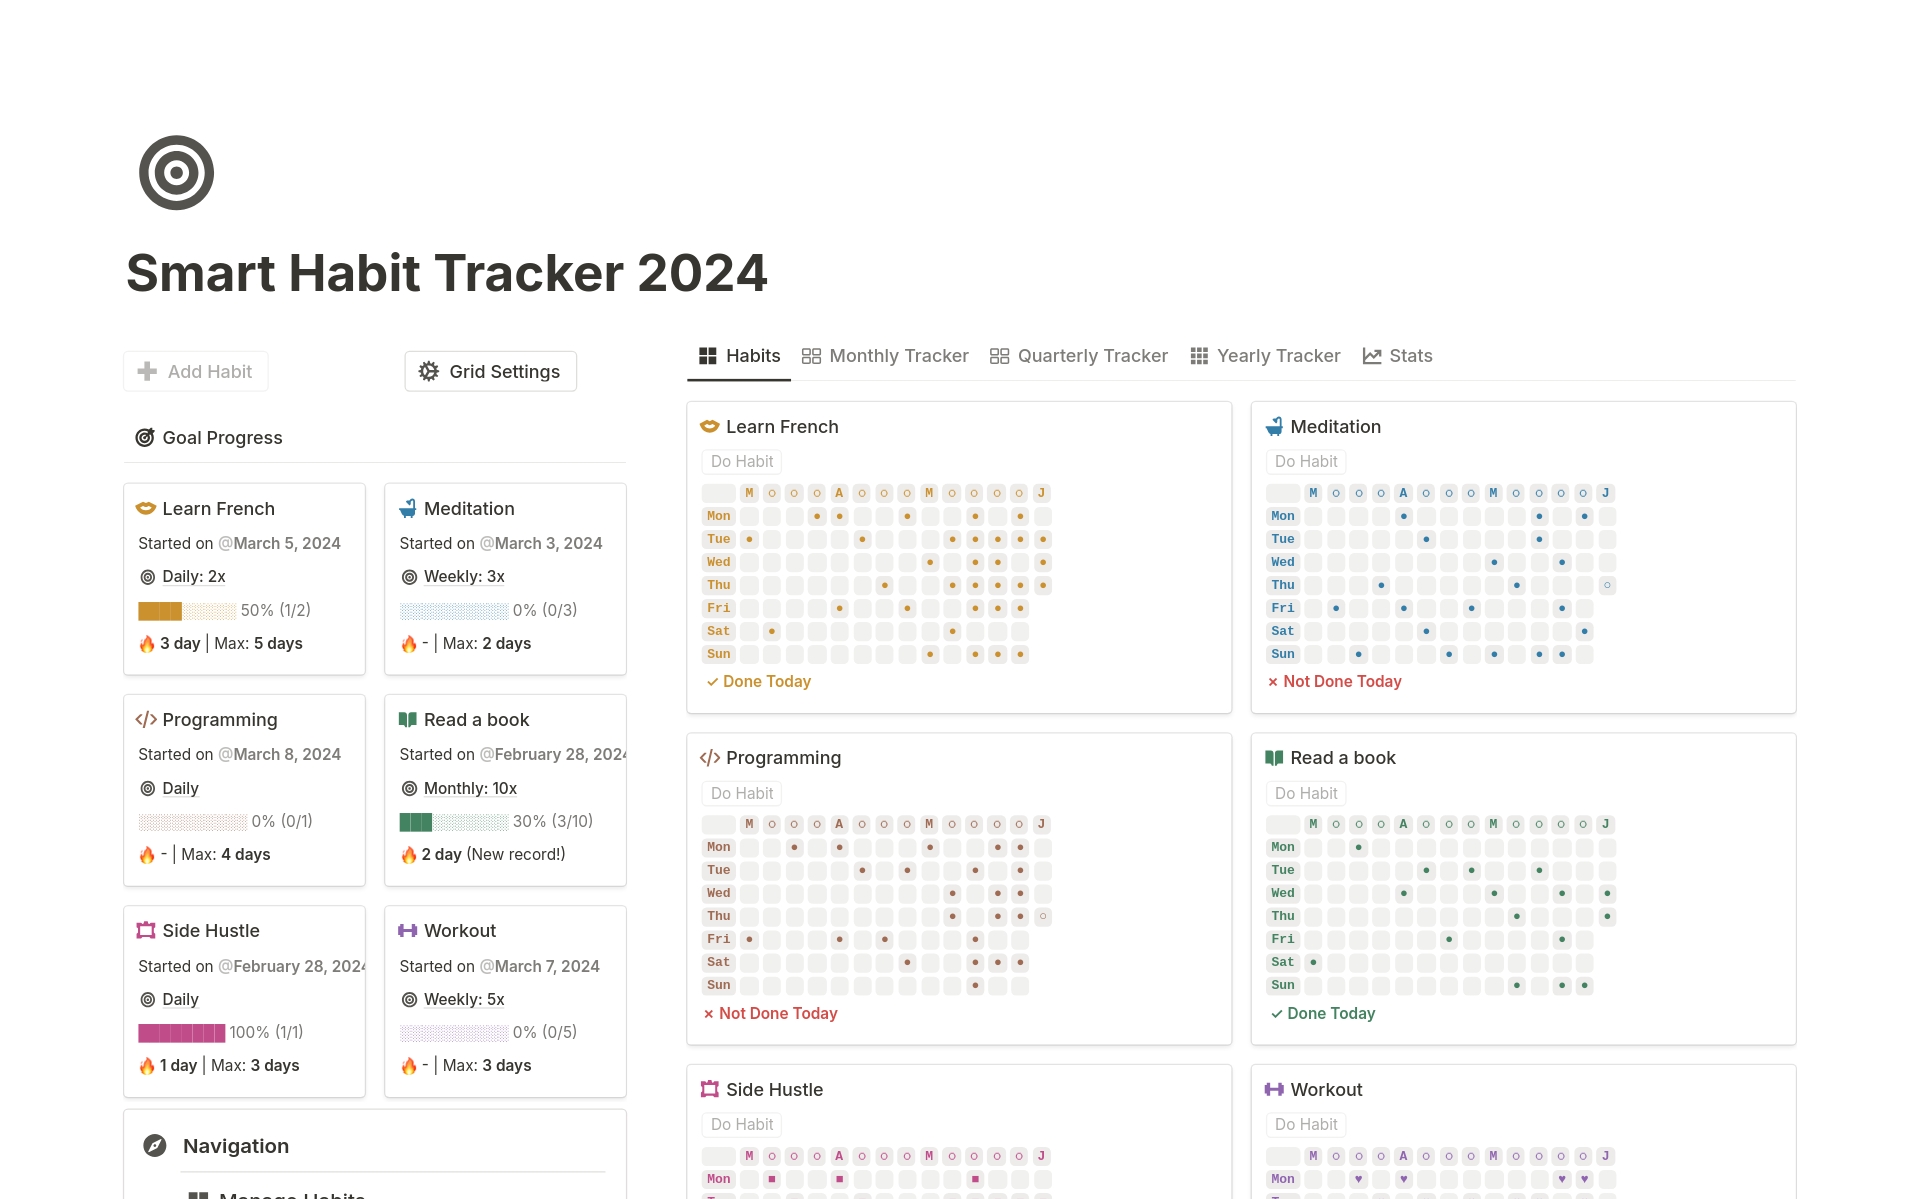 Vista previa de una plantilla para Smart Habit Tracker 2024